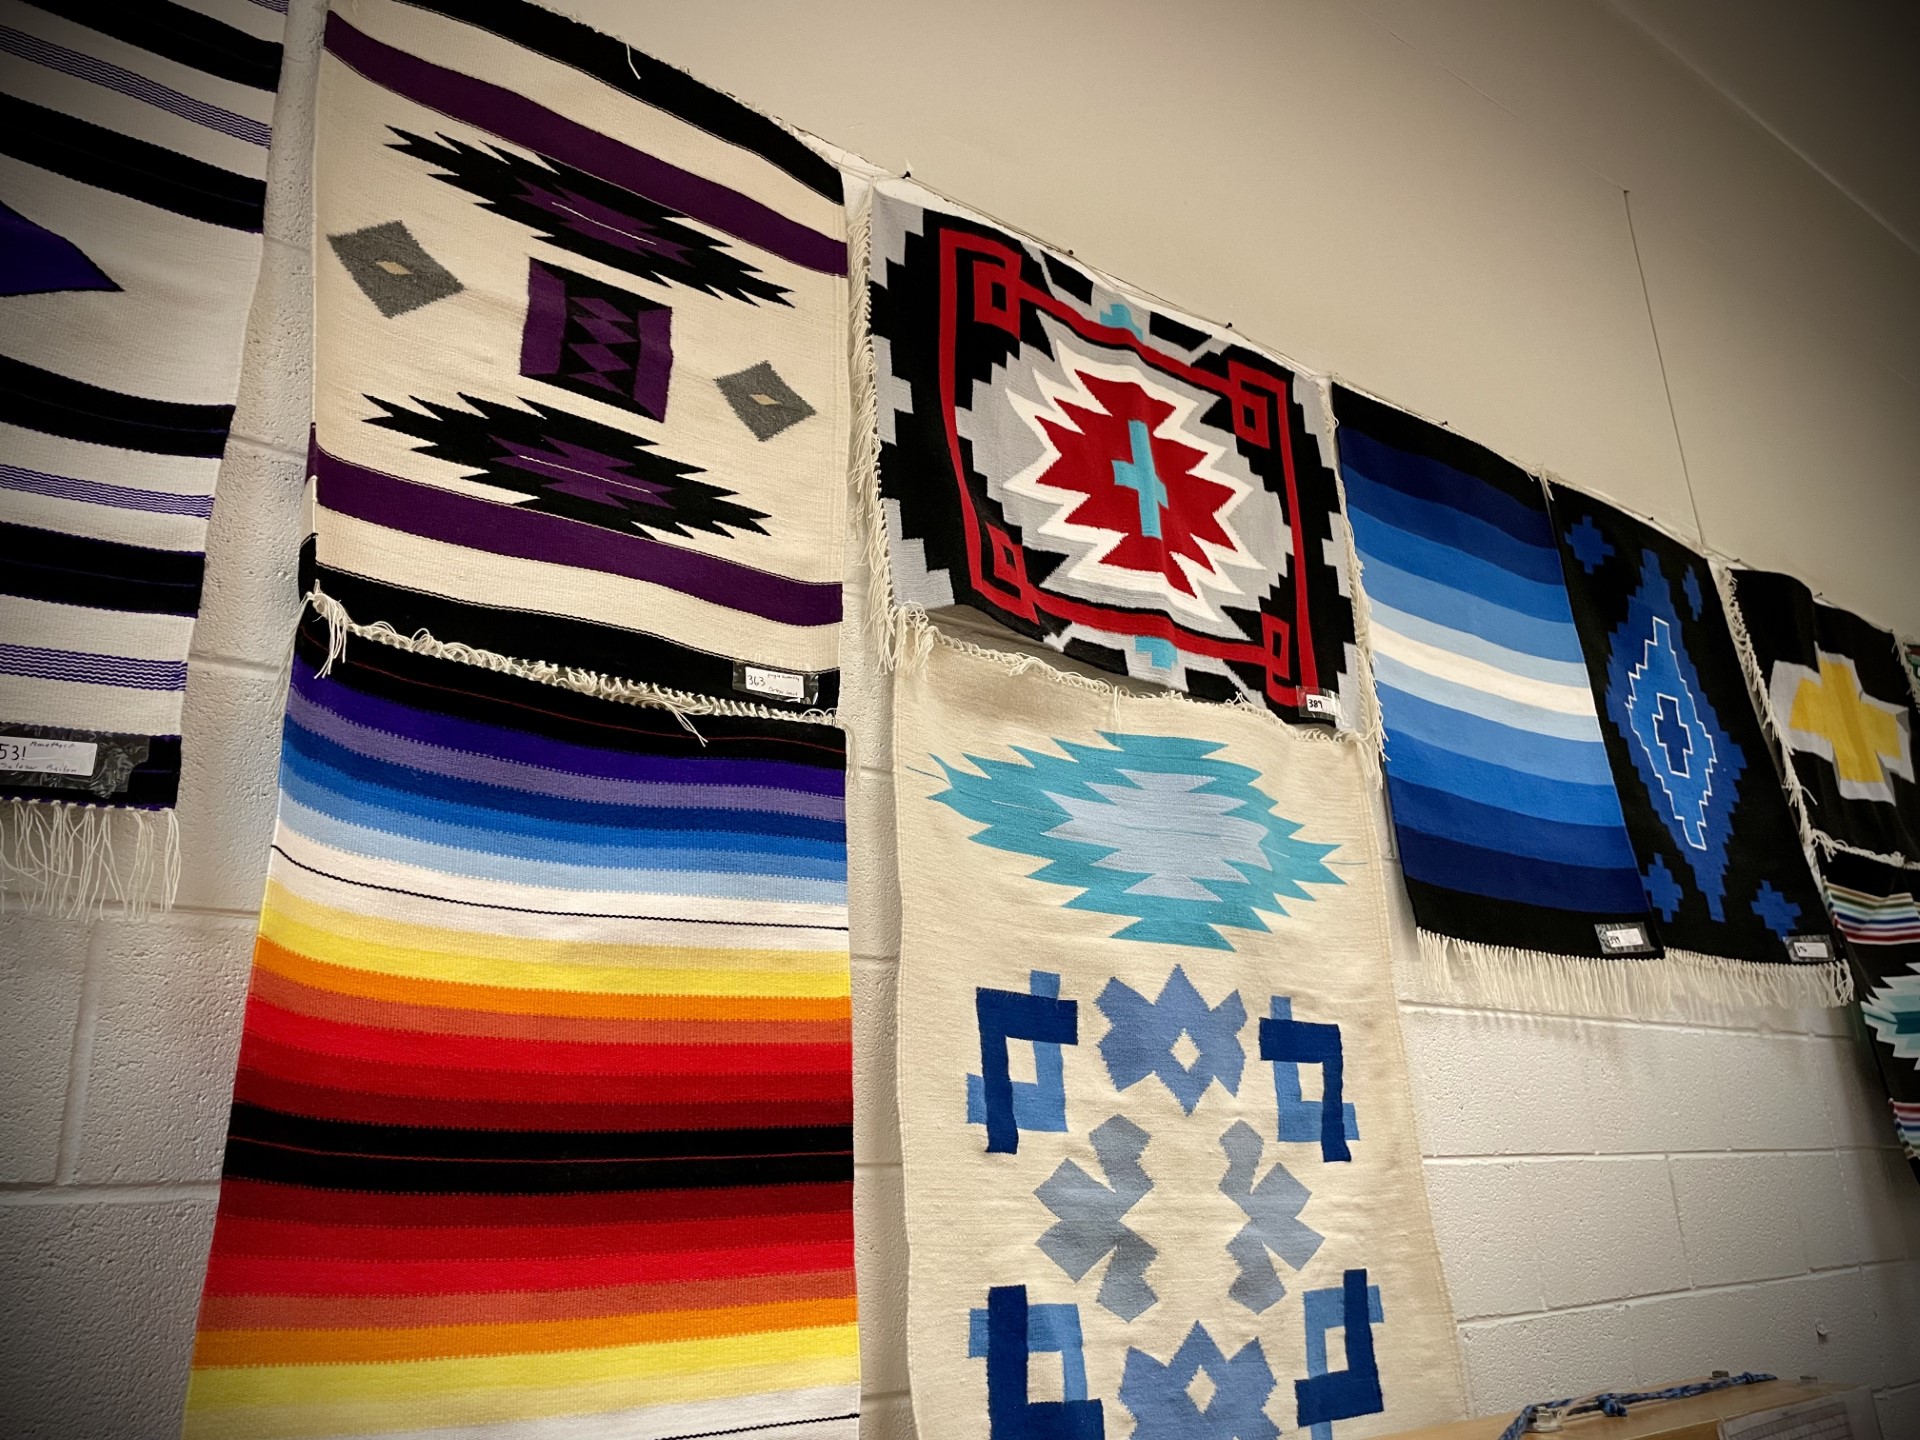 Woven rugs on display